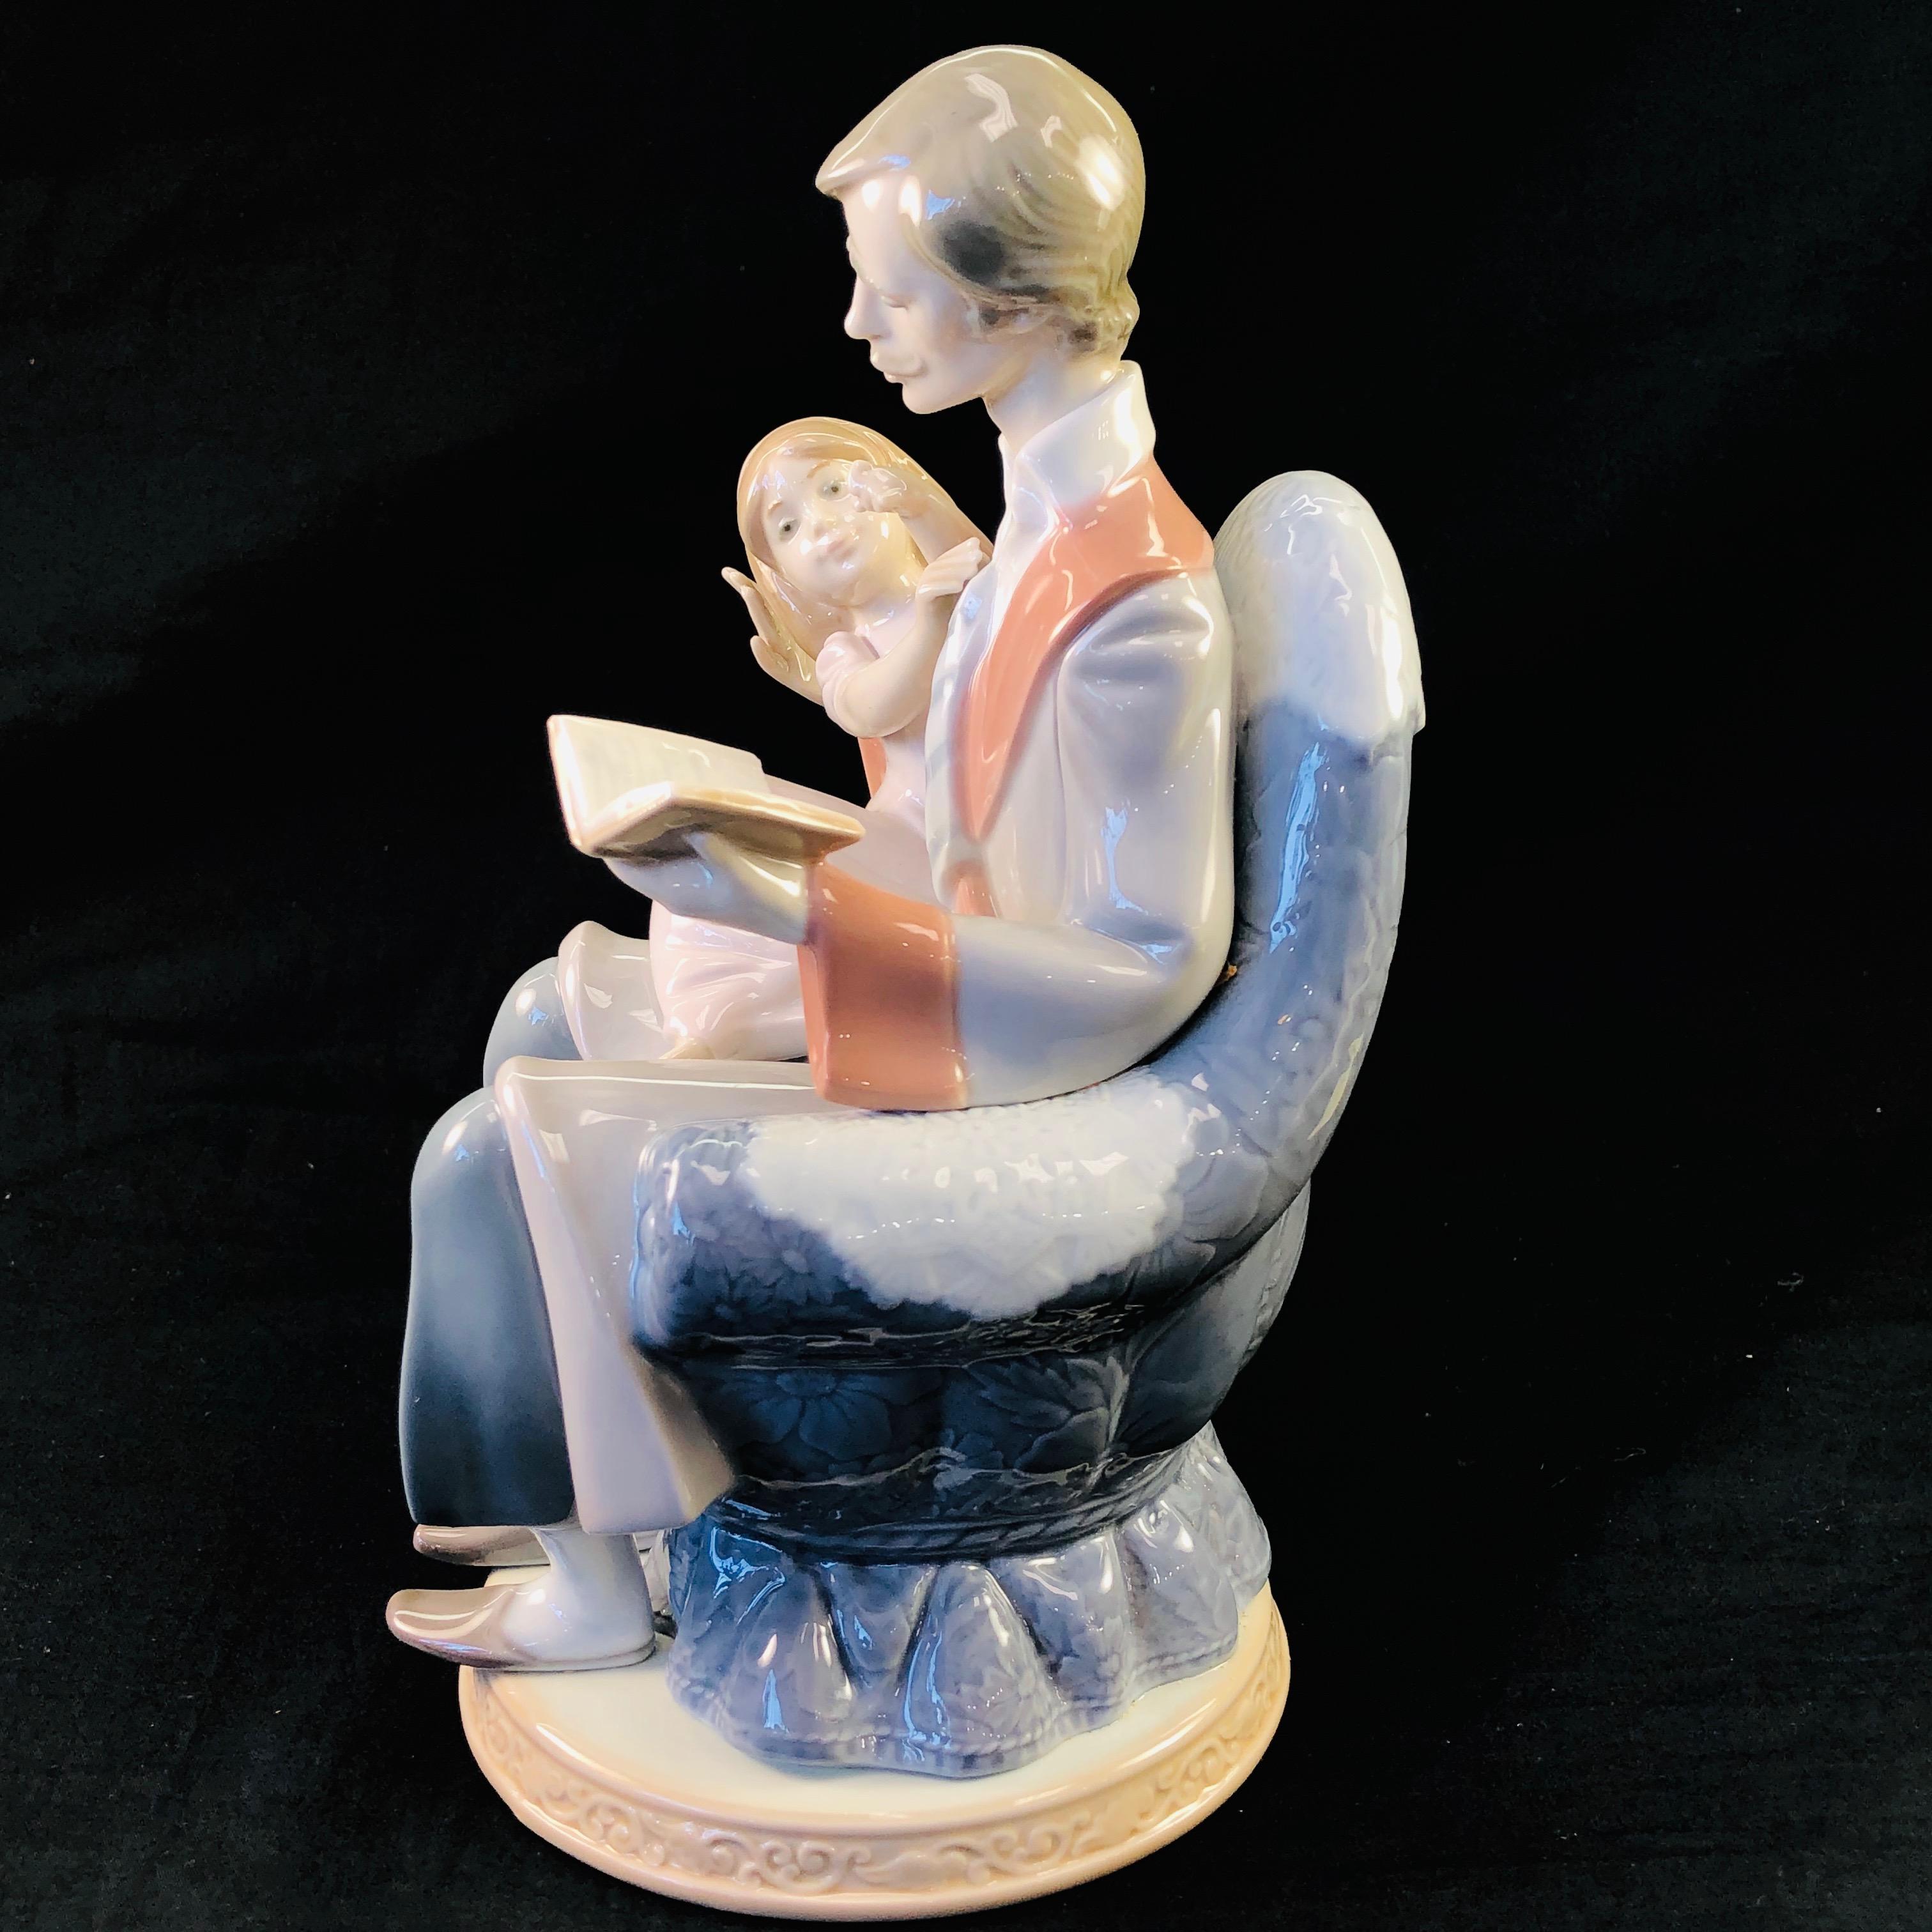 Estate Lladro #5584 "Father's Day" porcelain figurine with original box